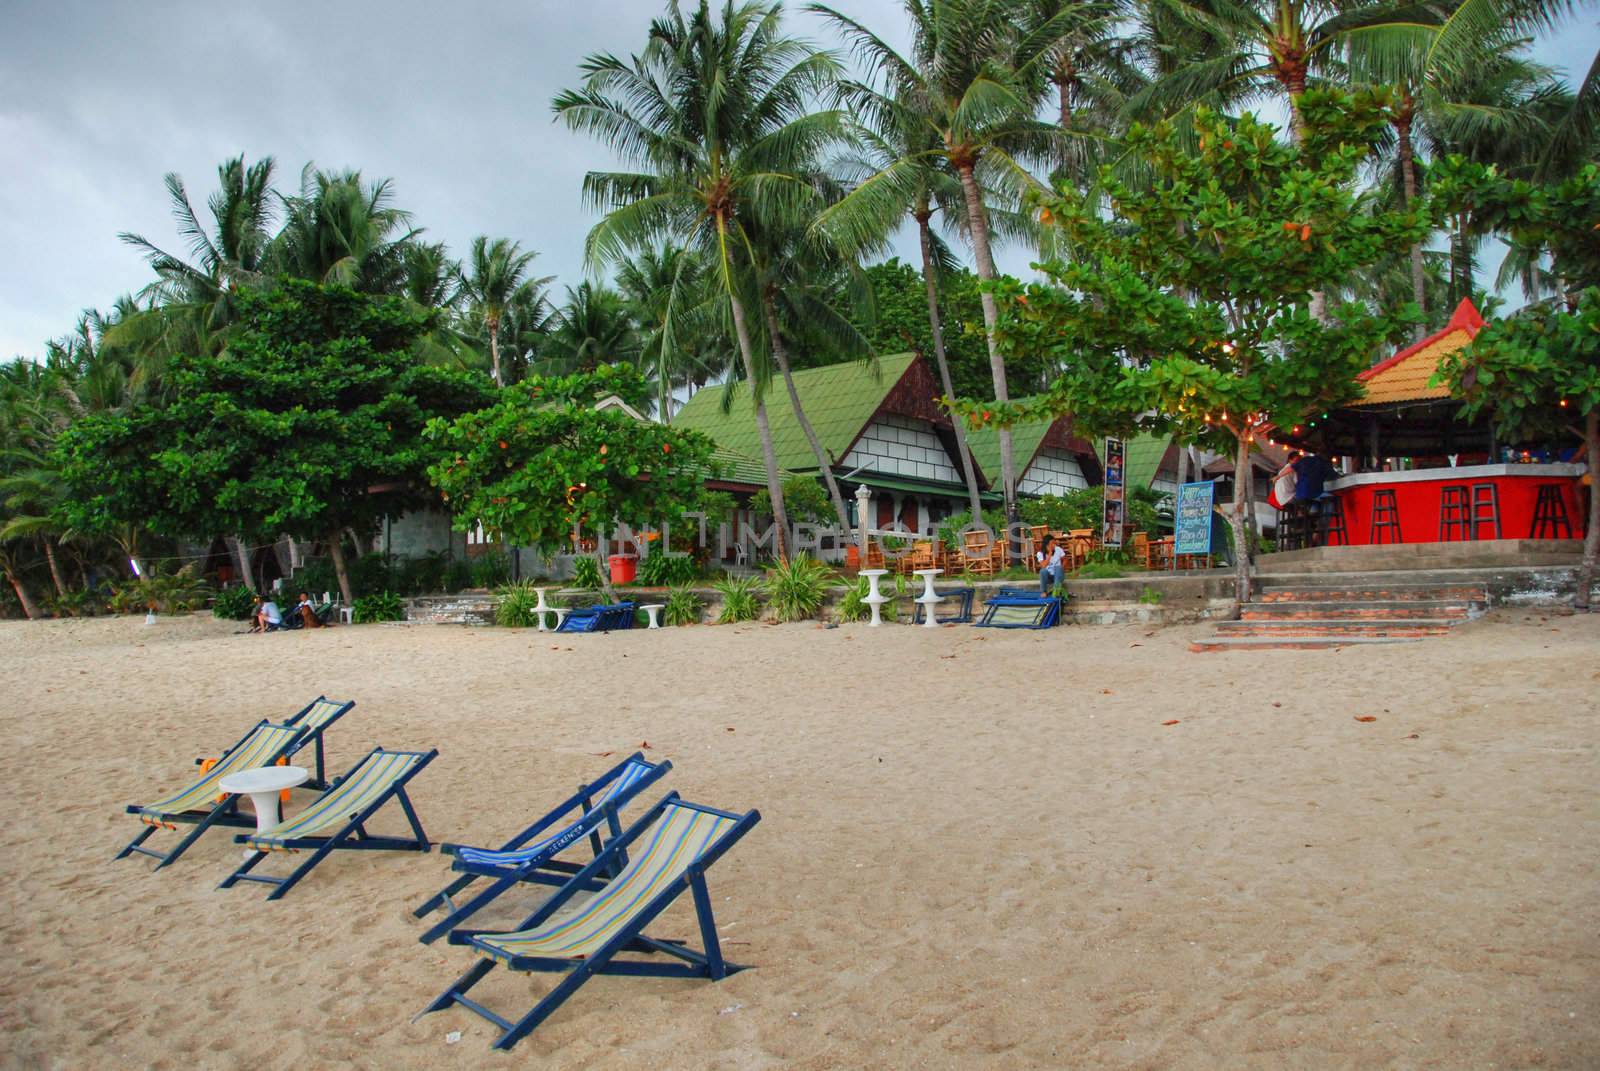 Deckchairs on the beach after sunset, Koh Samui